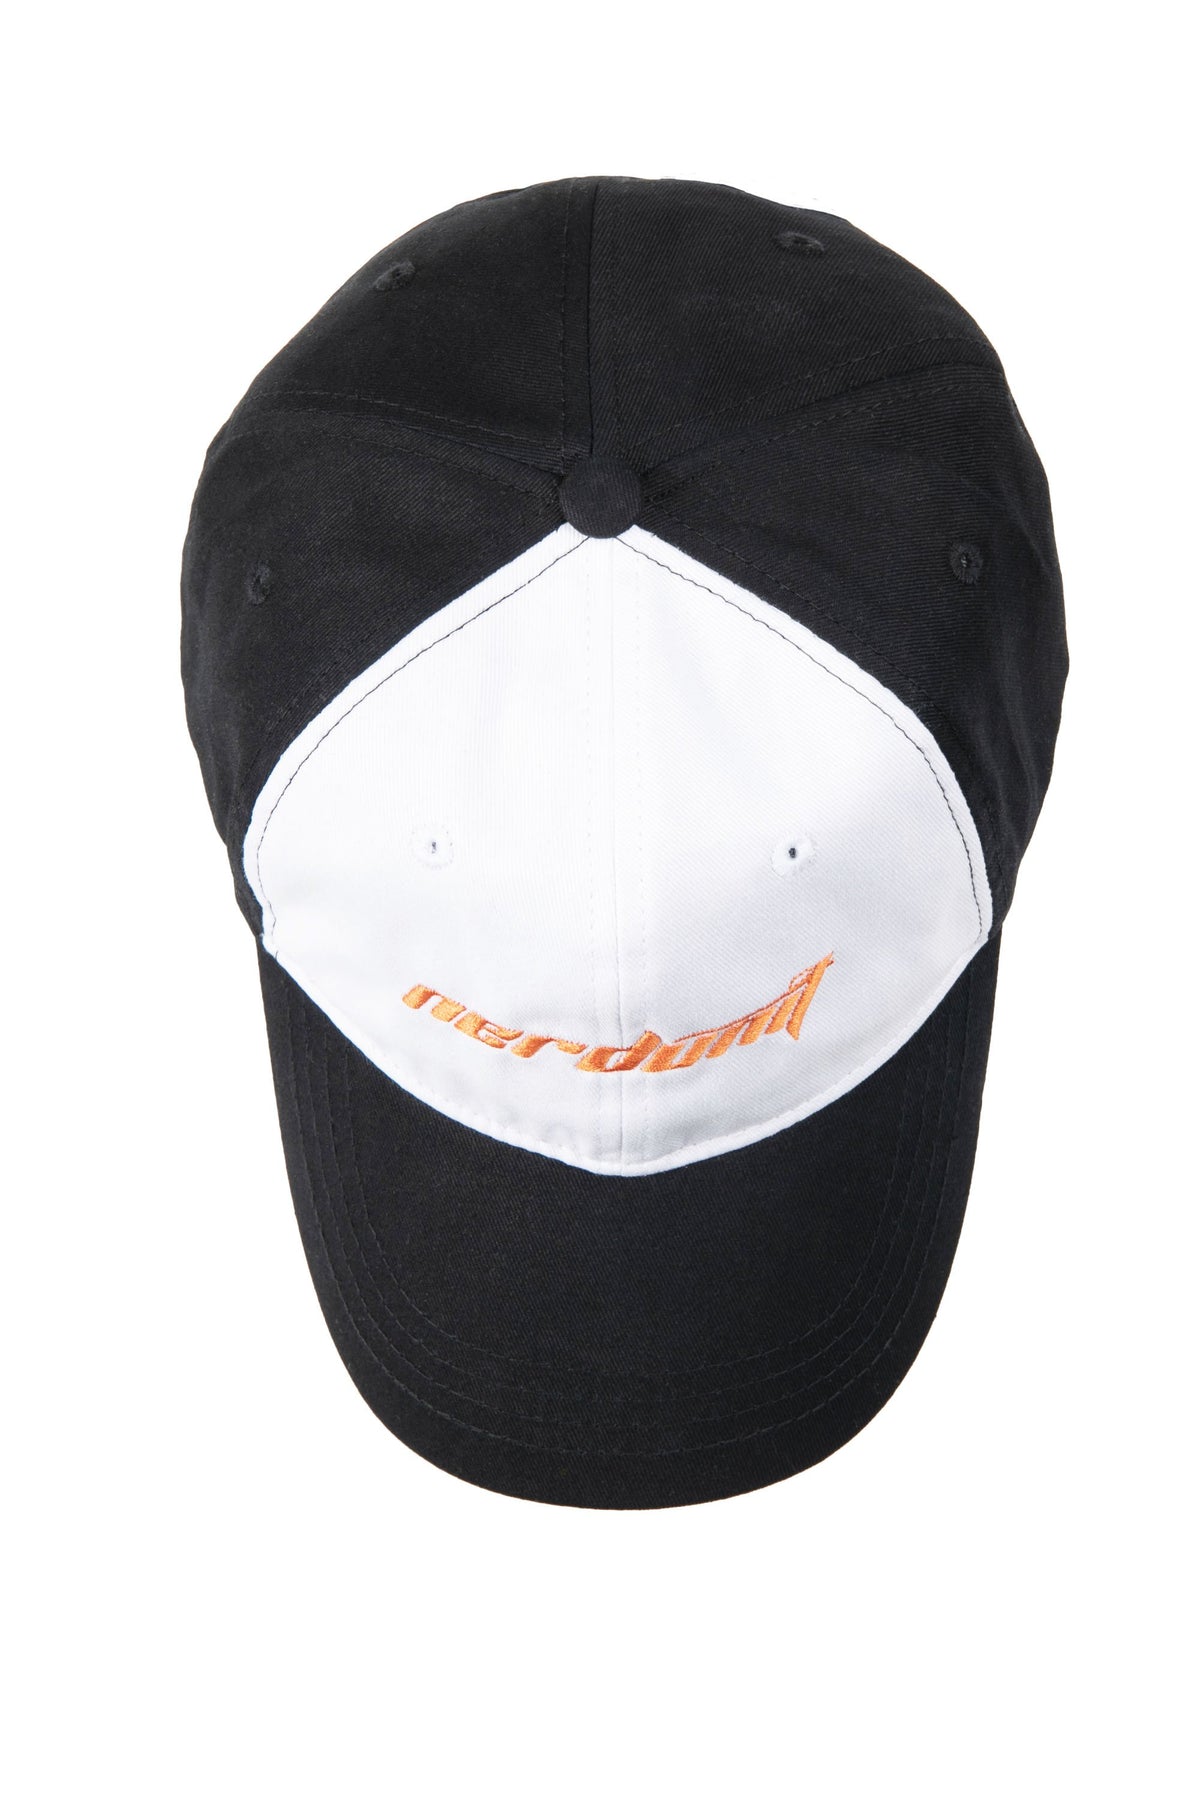 "DIVERGE" TRUCKER | BLACK, Cap, Adjustable buckle strap, Clip back closure, Embroidered logo, 100% Cotton